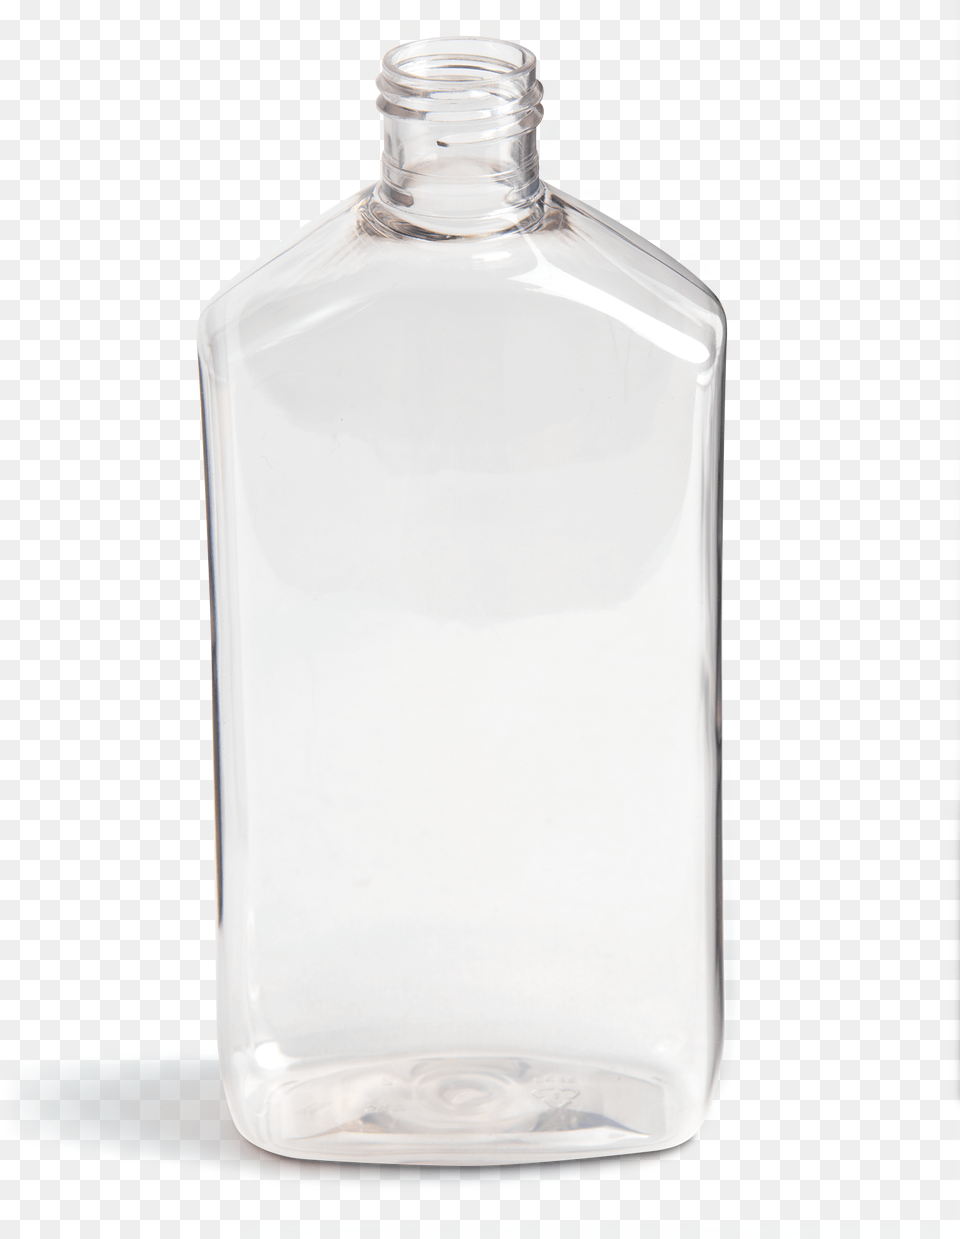 Oz Drug Oval Glass Bottle, Jar, Cosmetics, Perfume, Jug Png Image